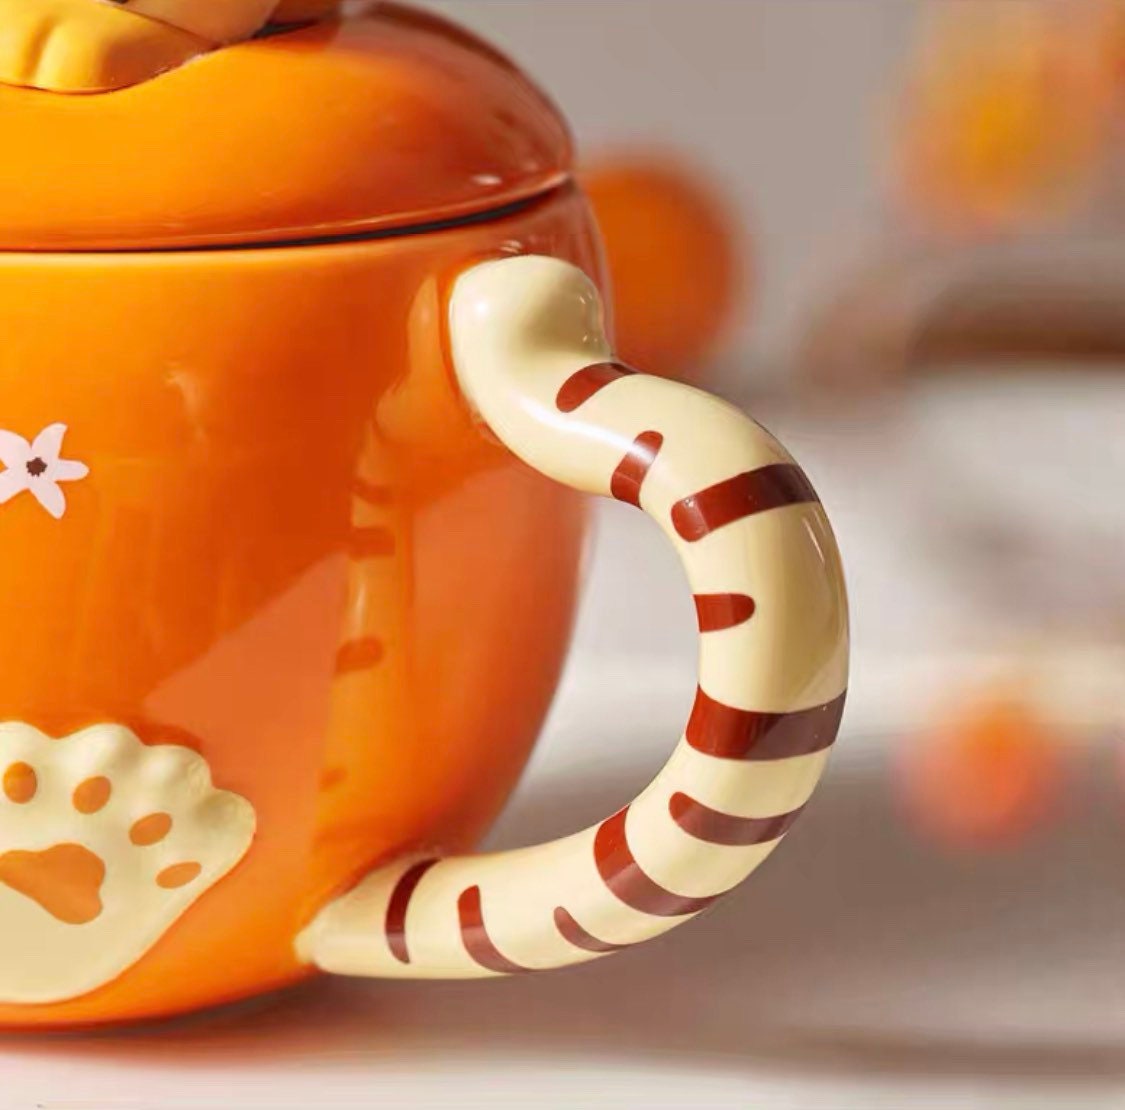 Starbucks China 300ml 2022 new year cute tiger series orange shape ceramics mug with tiger cover